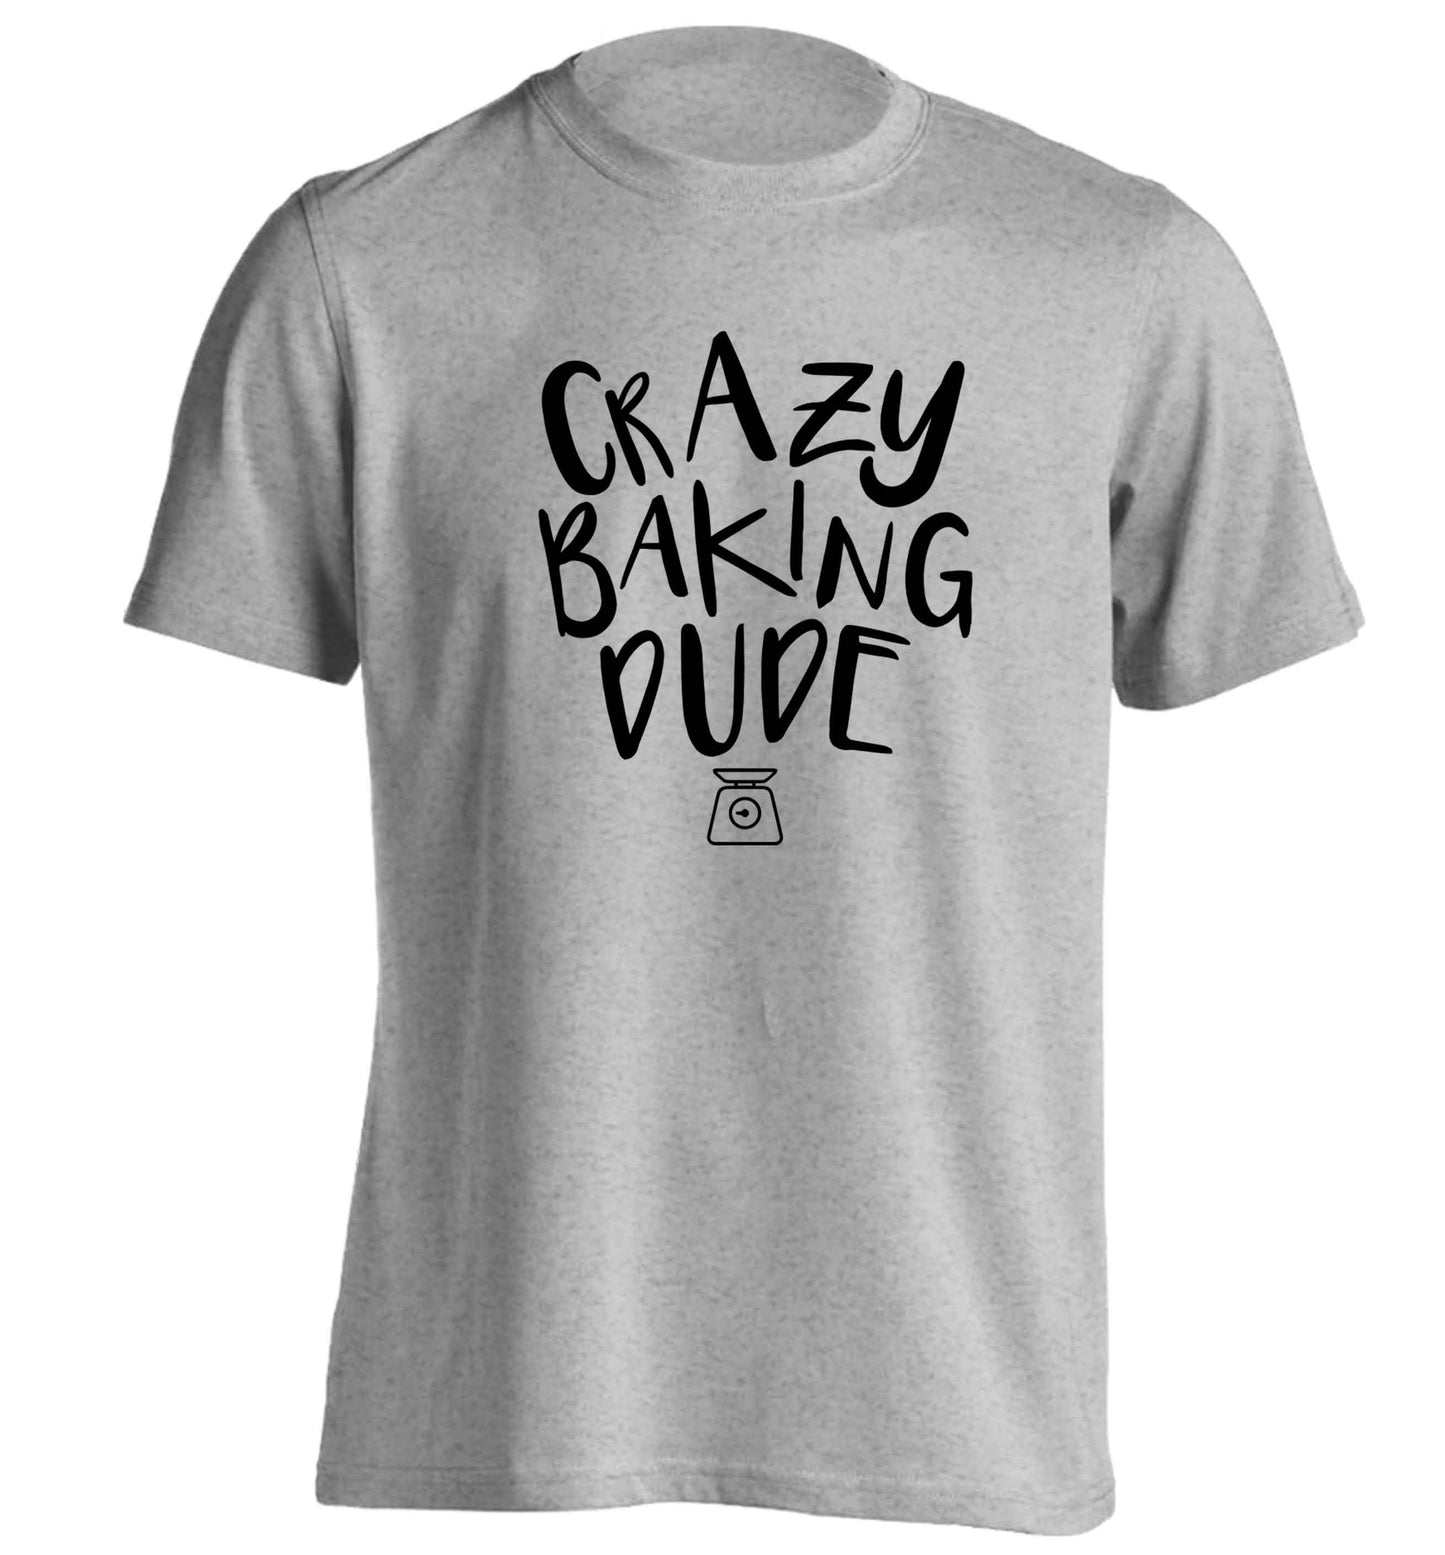 Crazy baking dude adults unisex grey Tshirt 2XL